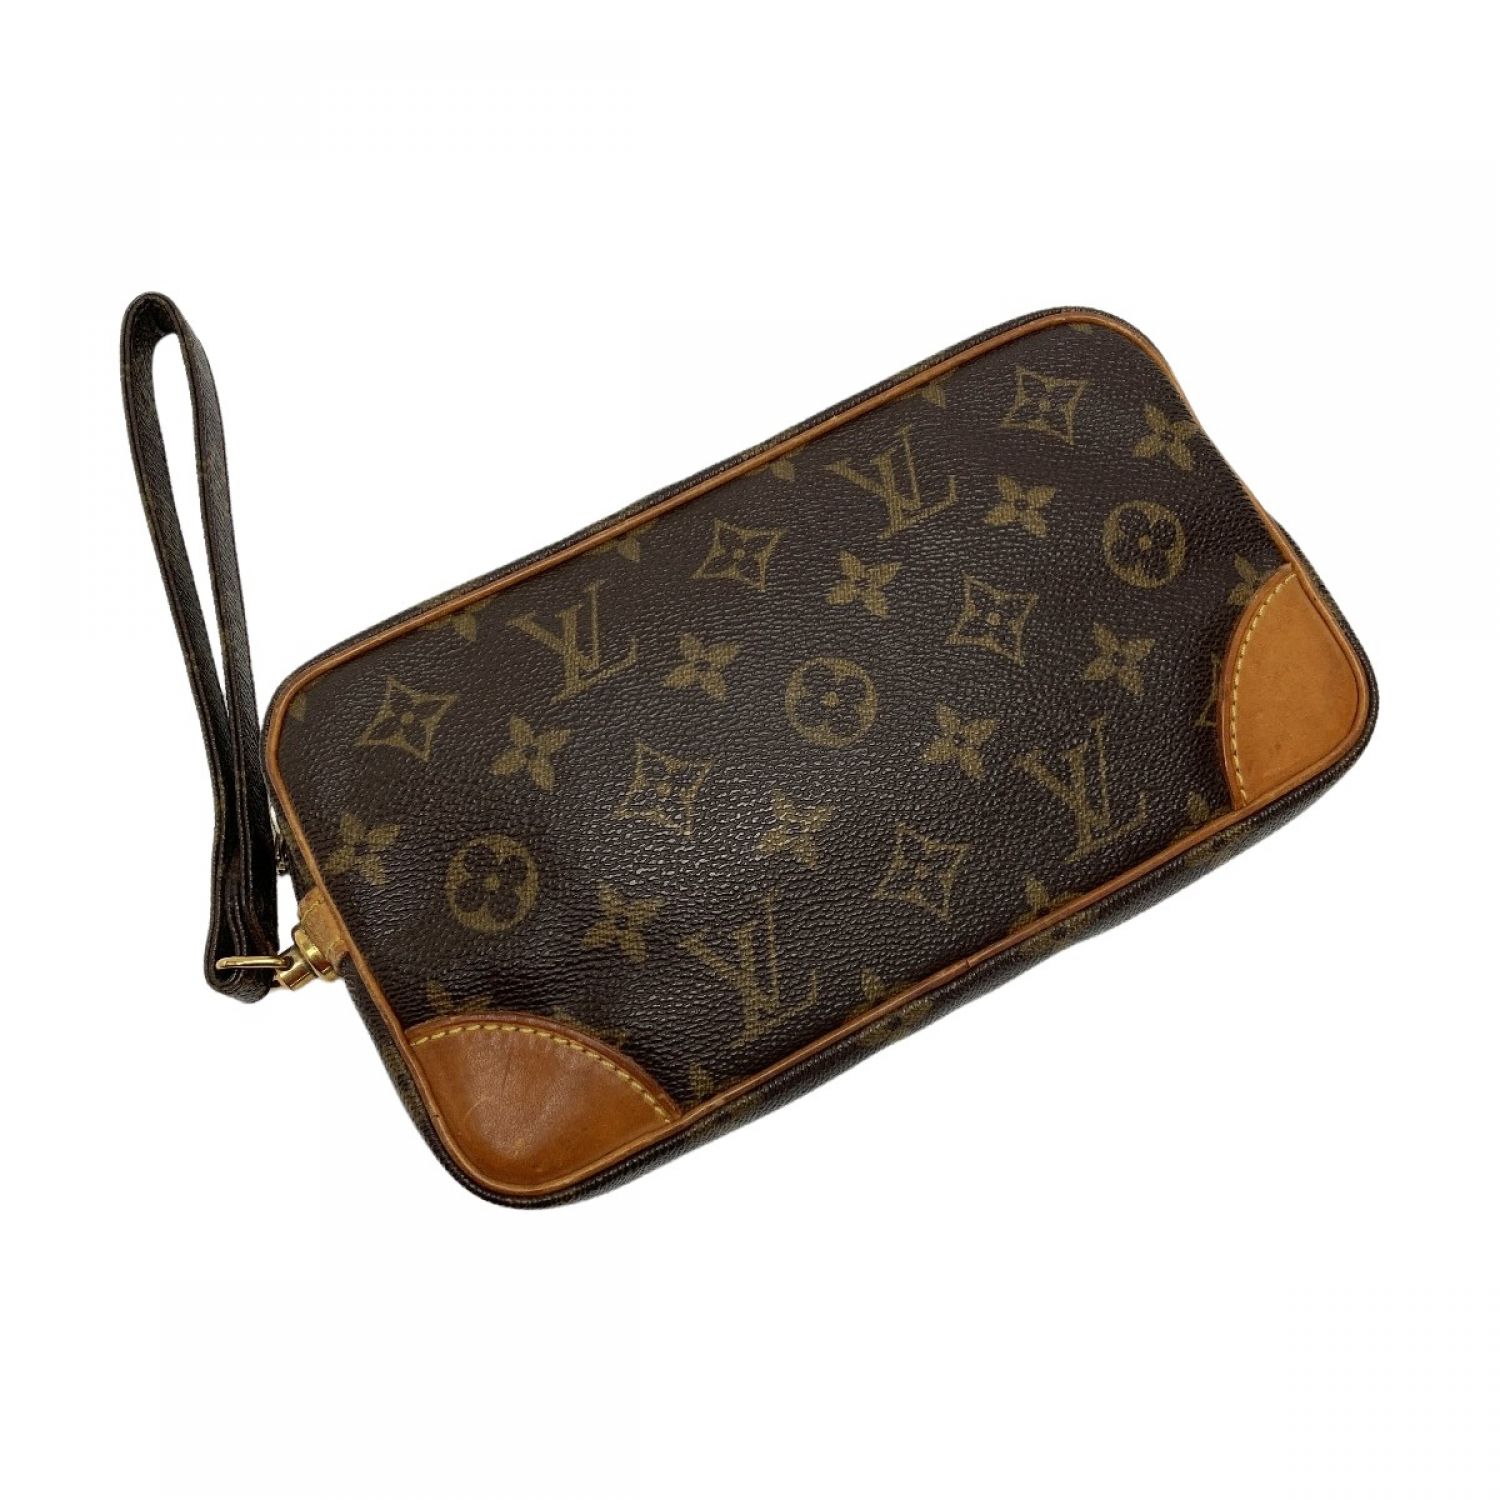 【Louis Vuitton】マルリードラゴンヌ クラッチバッグ セカンドバッグ